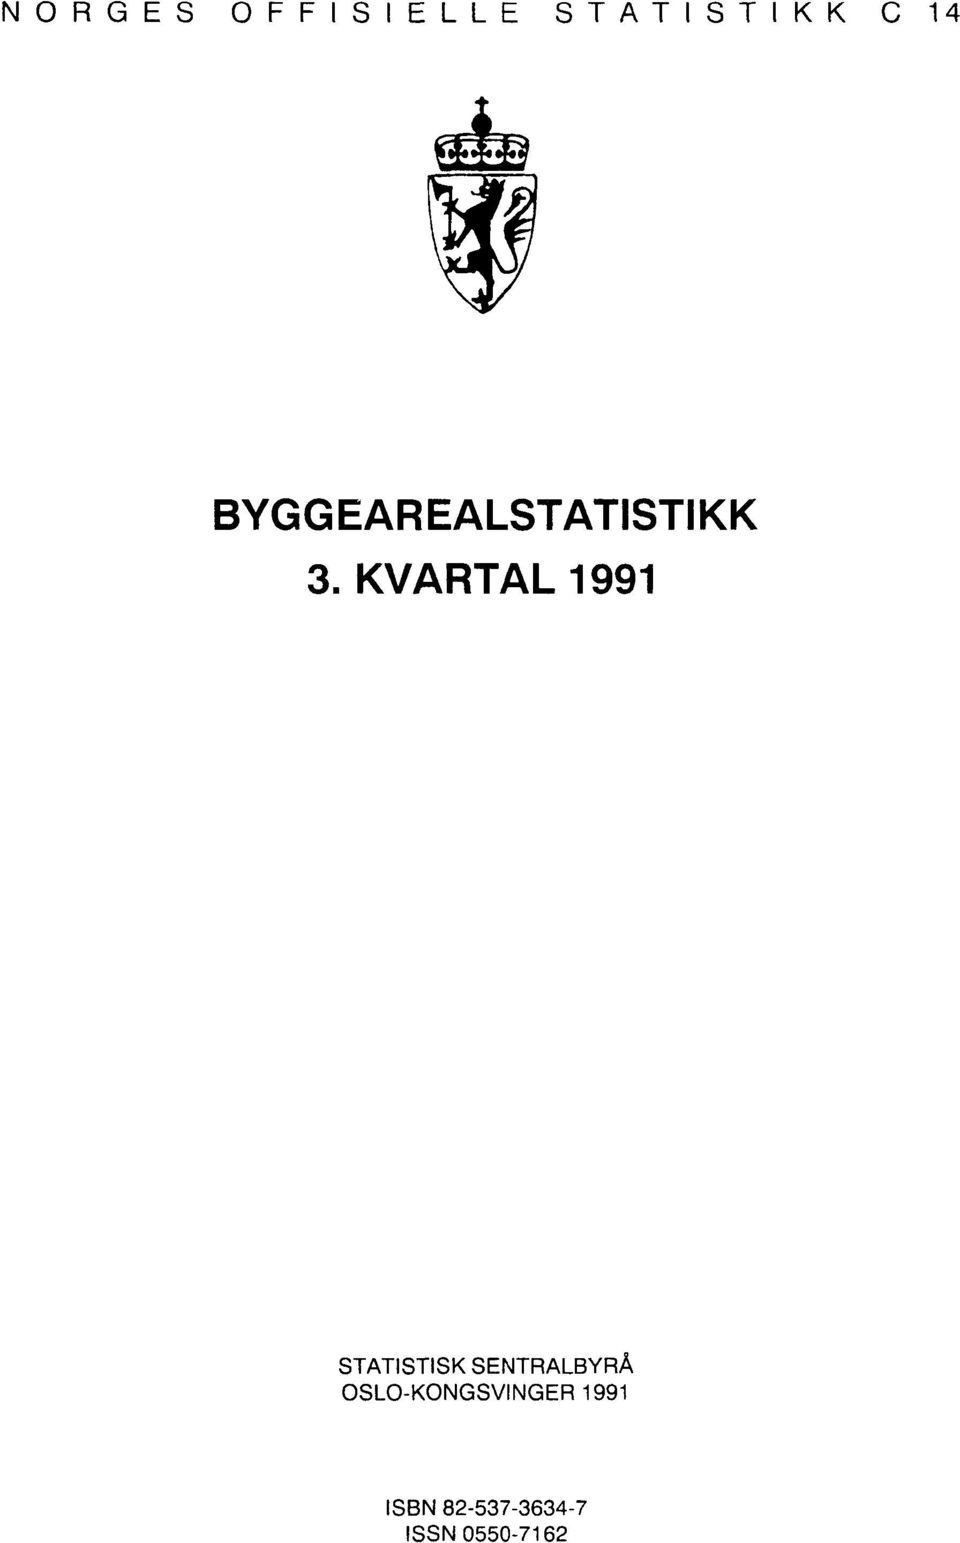 KVARTAL 1991 STATISTISK SENTRALBYRÅ